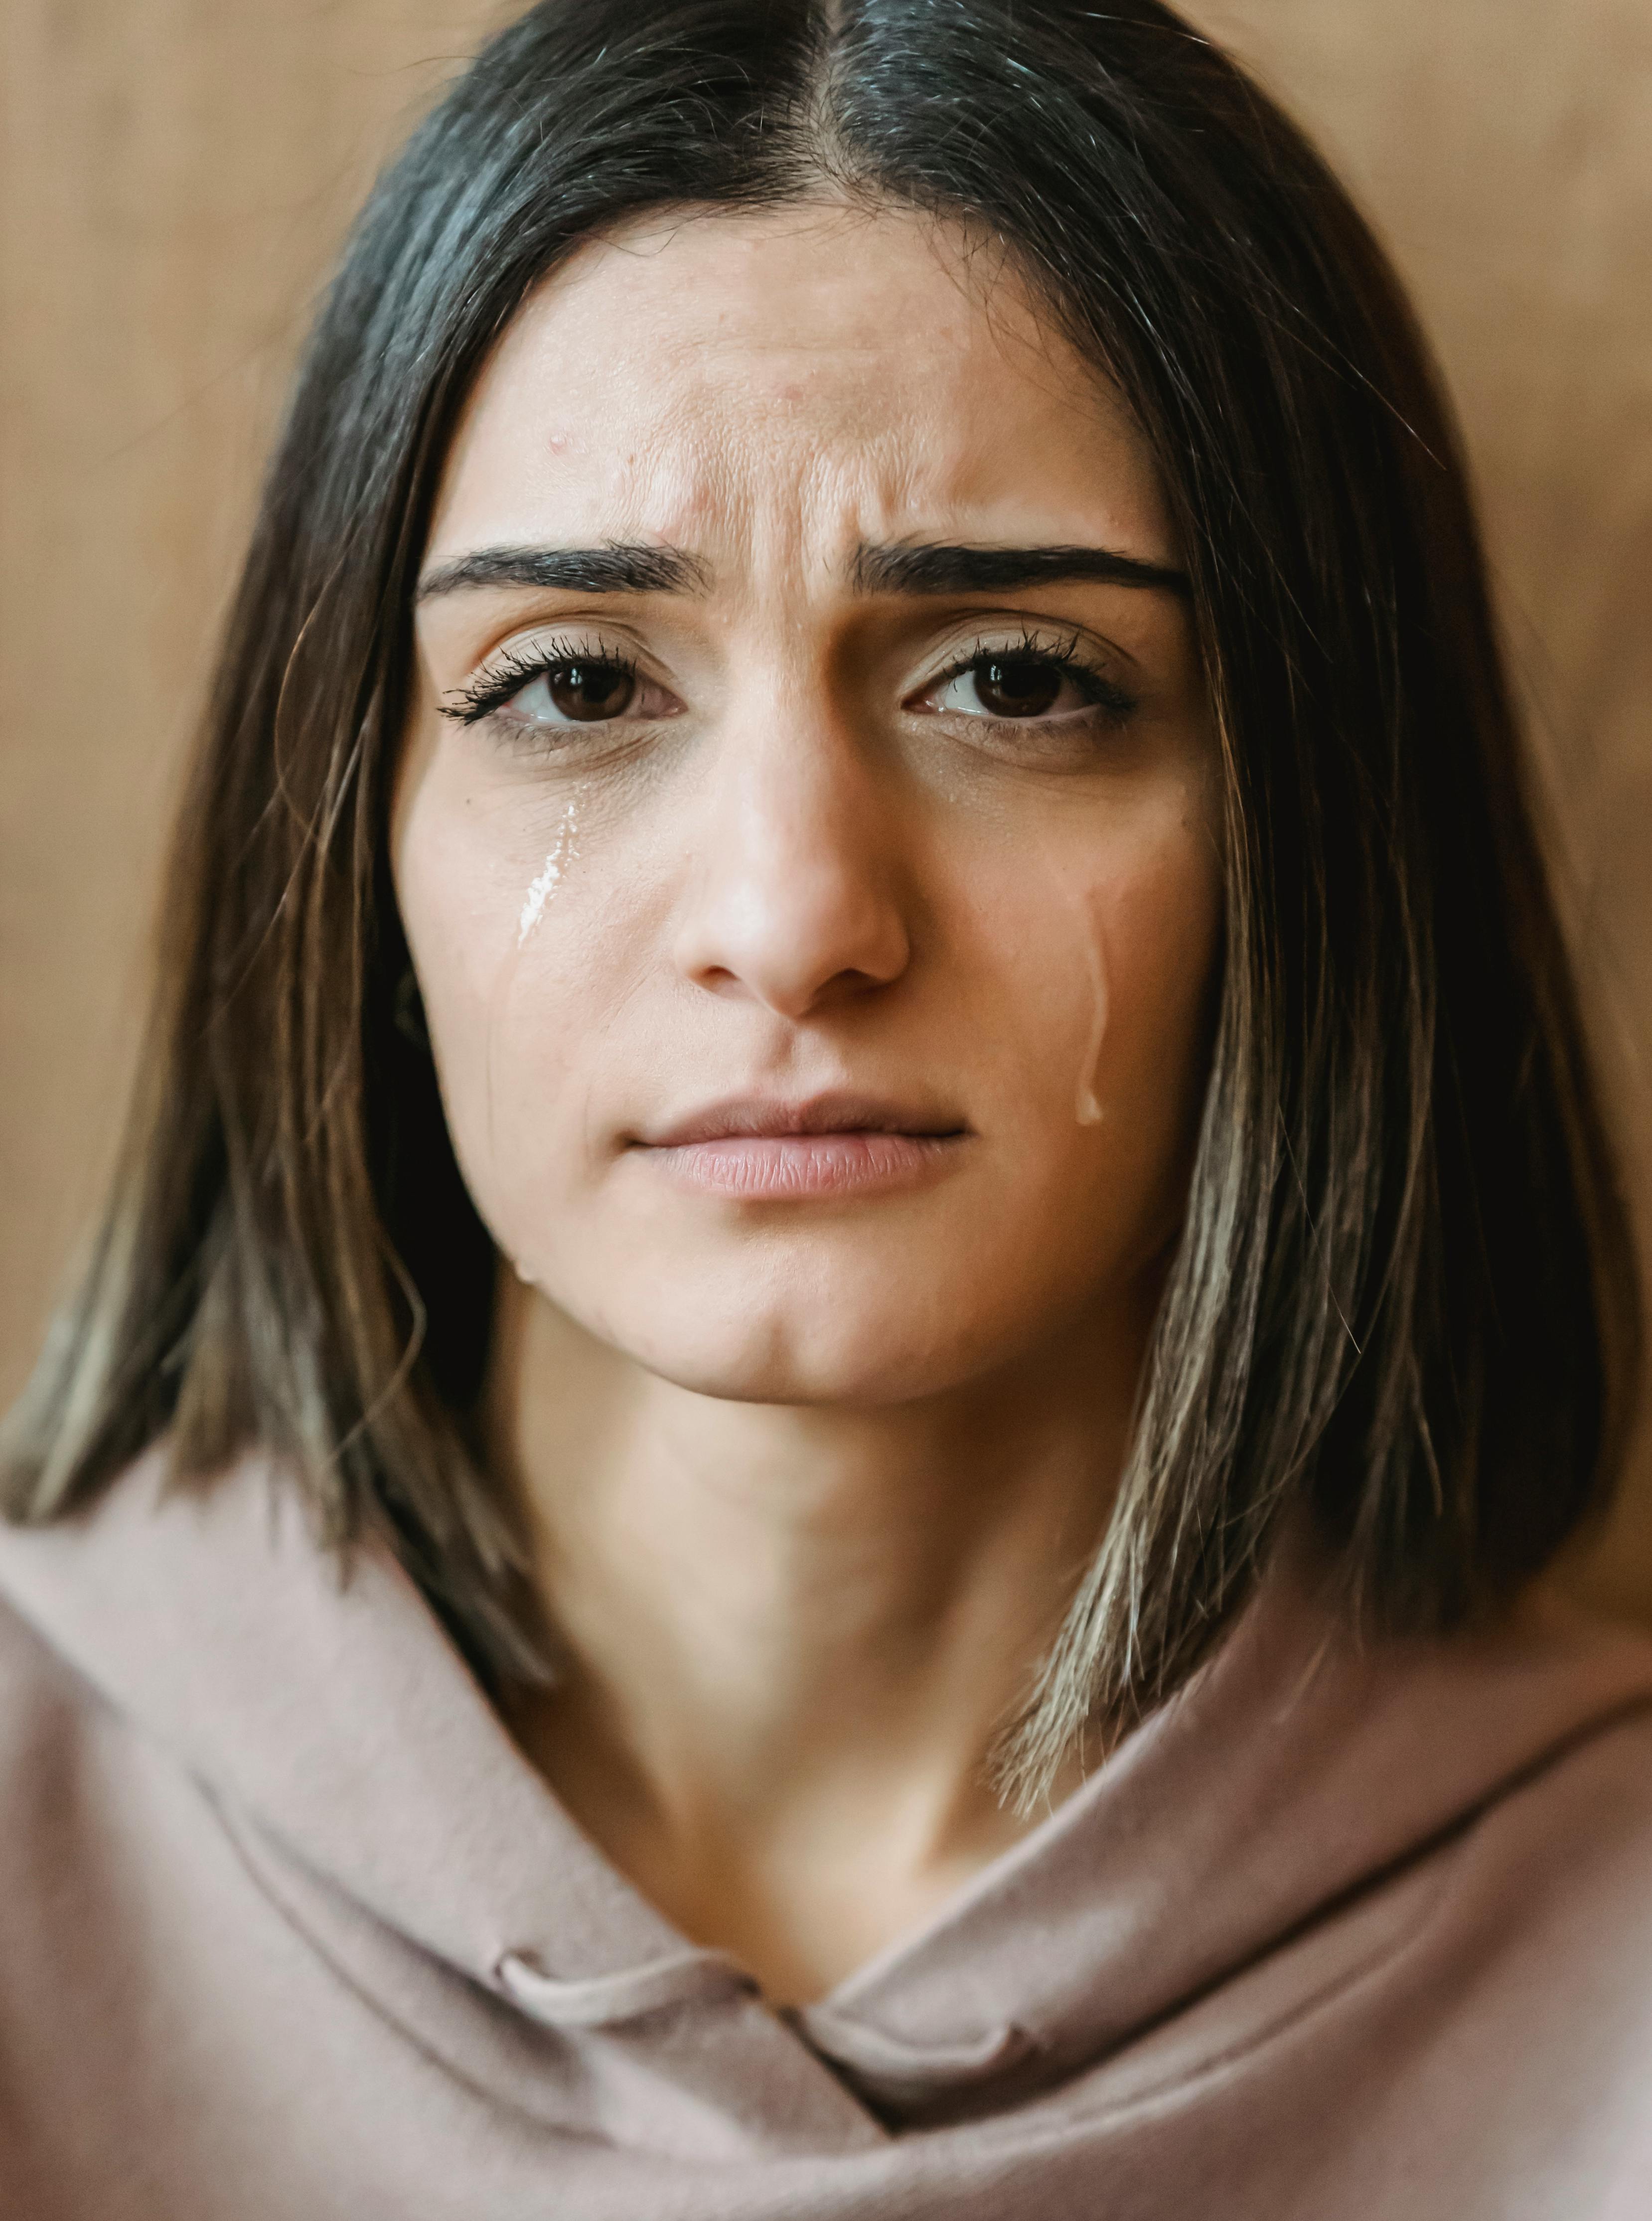 A sad woman crying | Source: Pexels